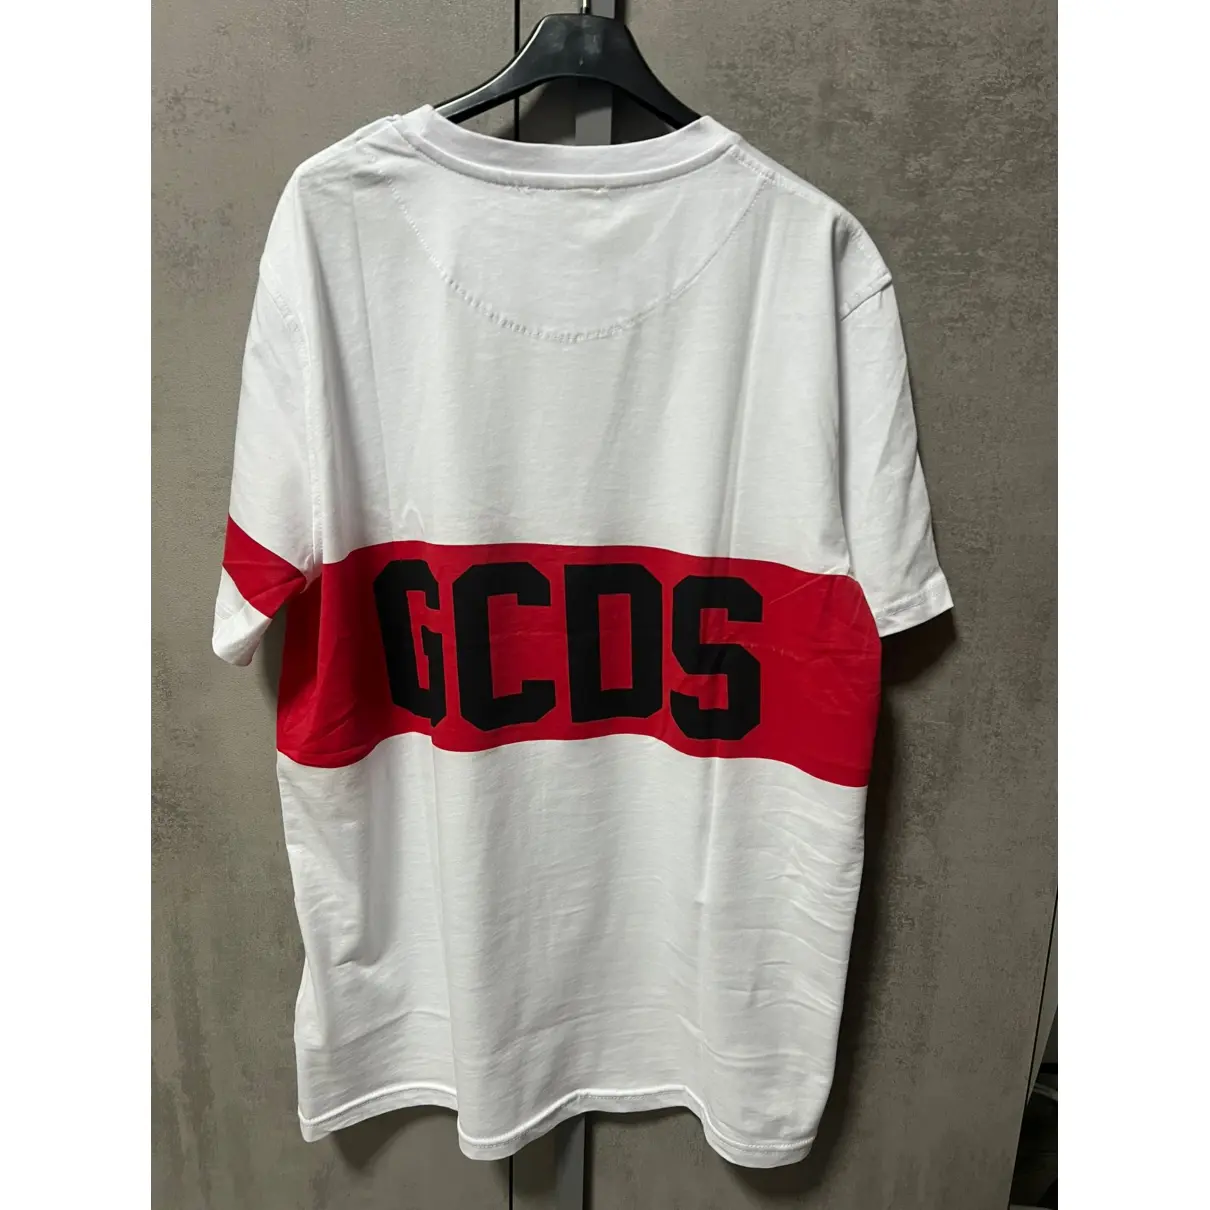 Buy GCDS T-shirt online